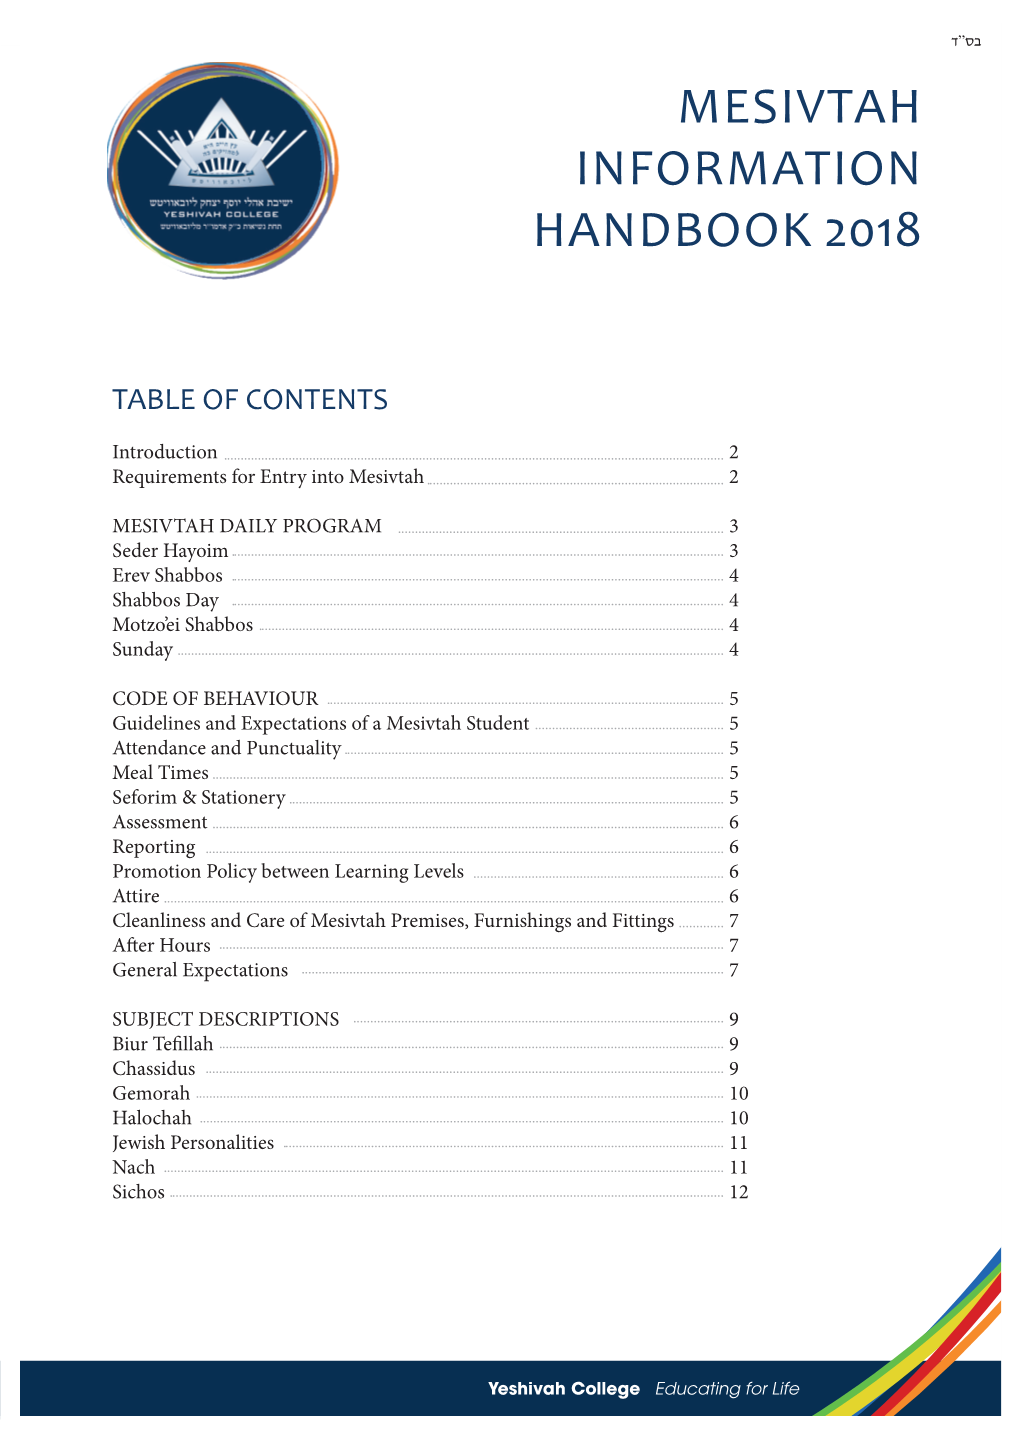 Mesivtah Information Handbook 2018